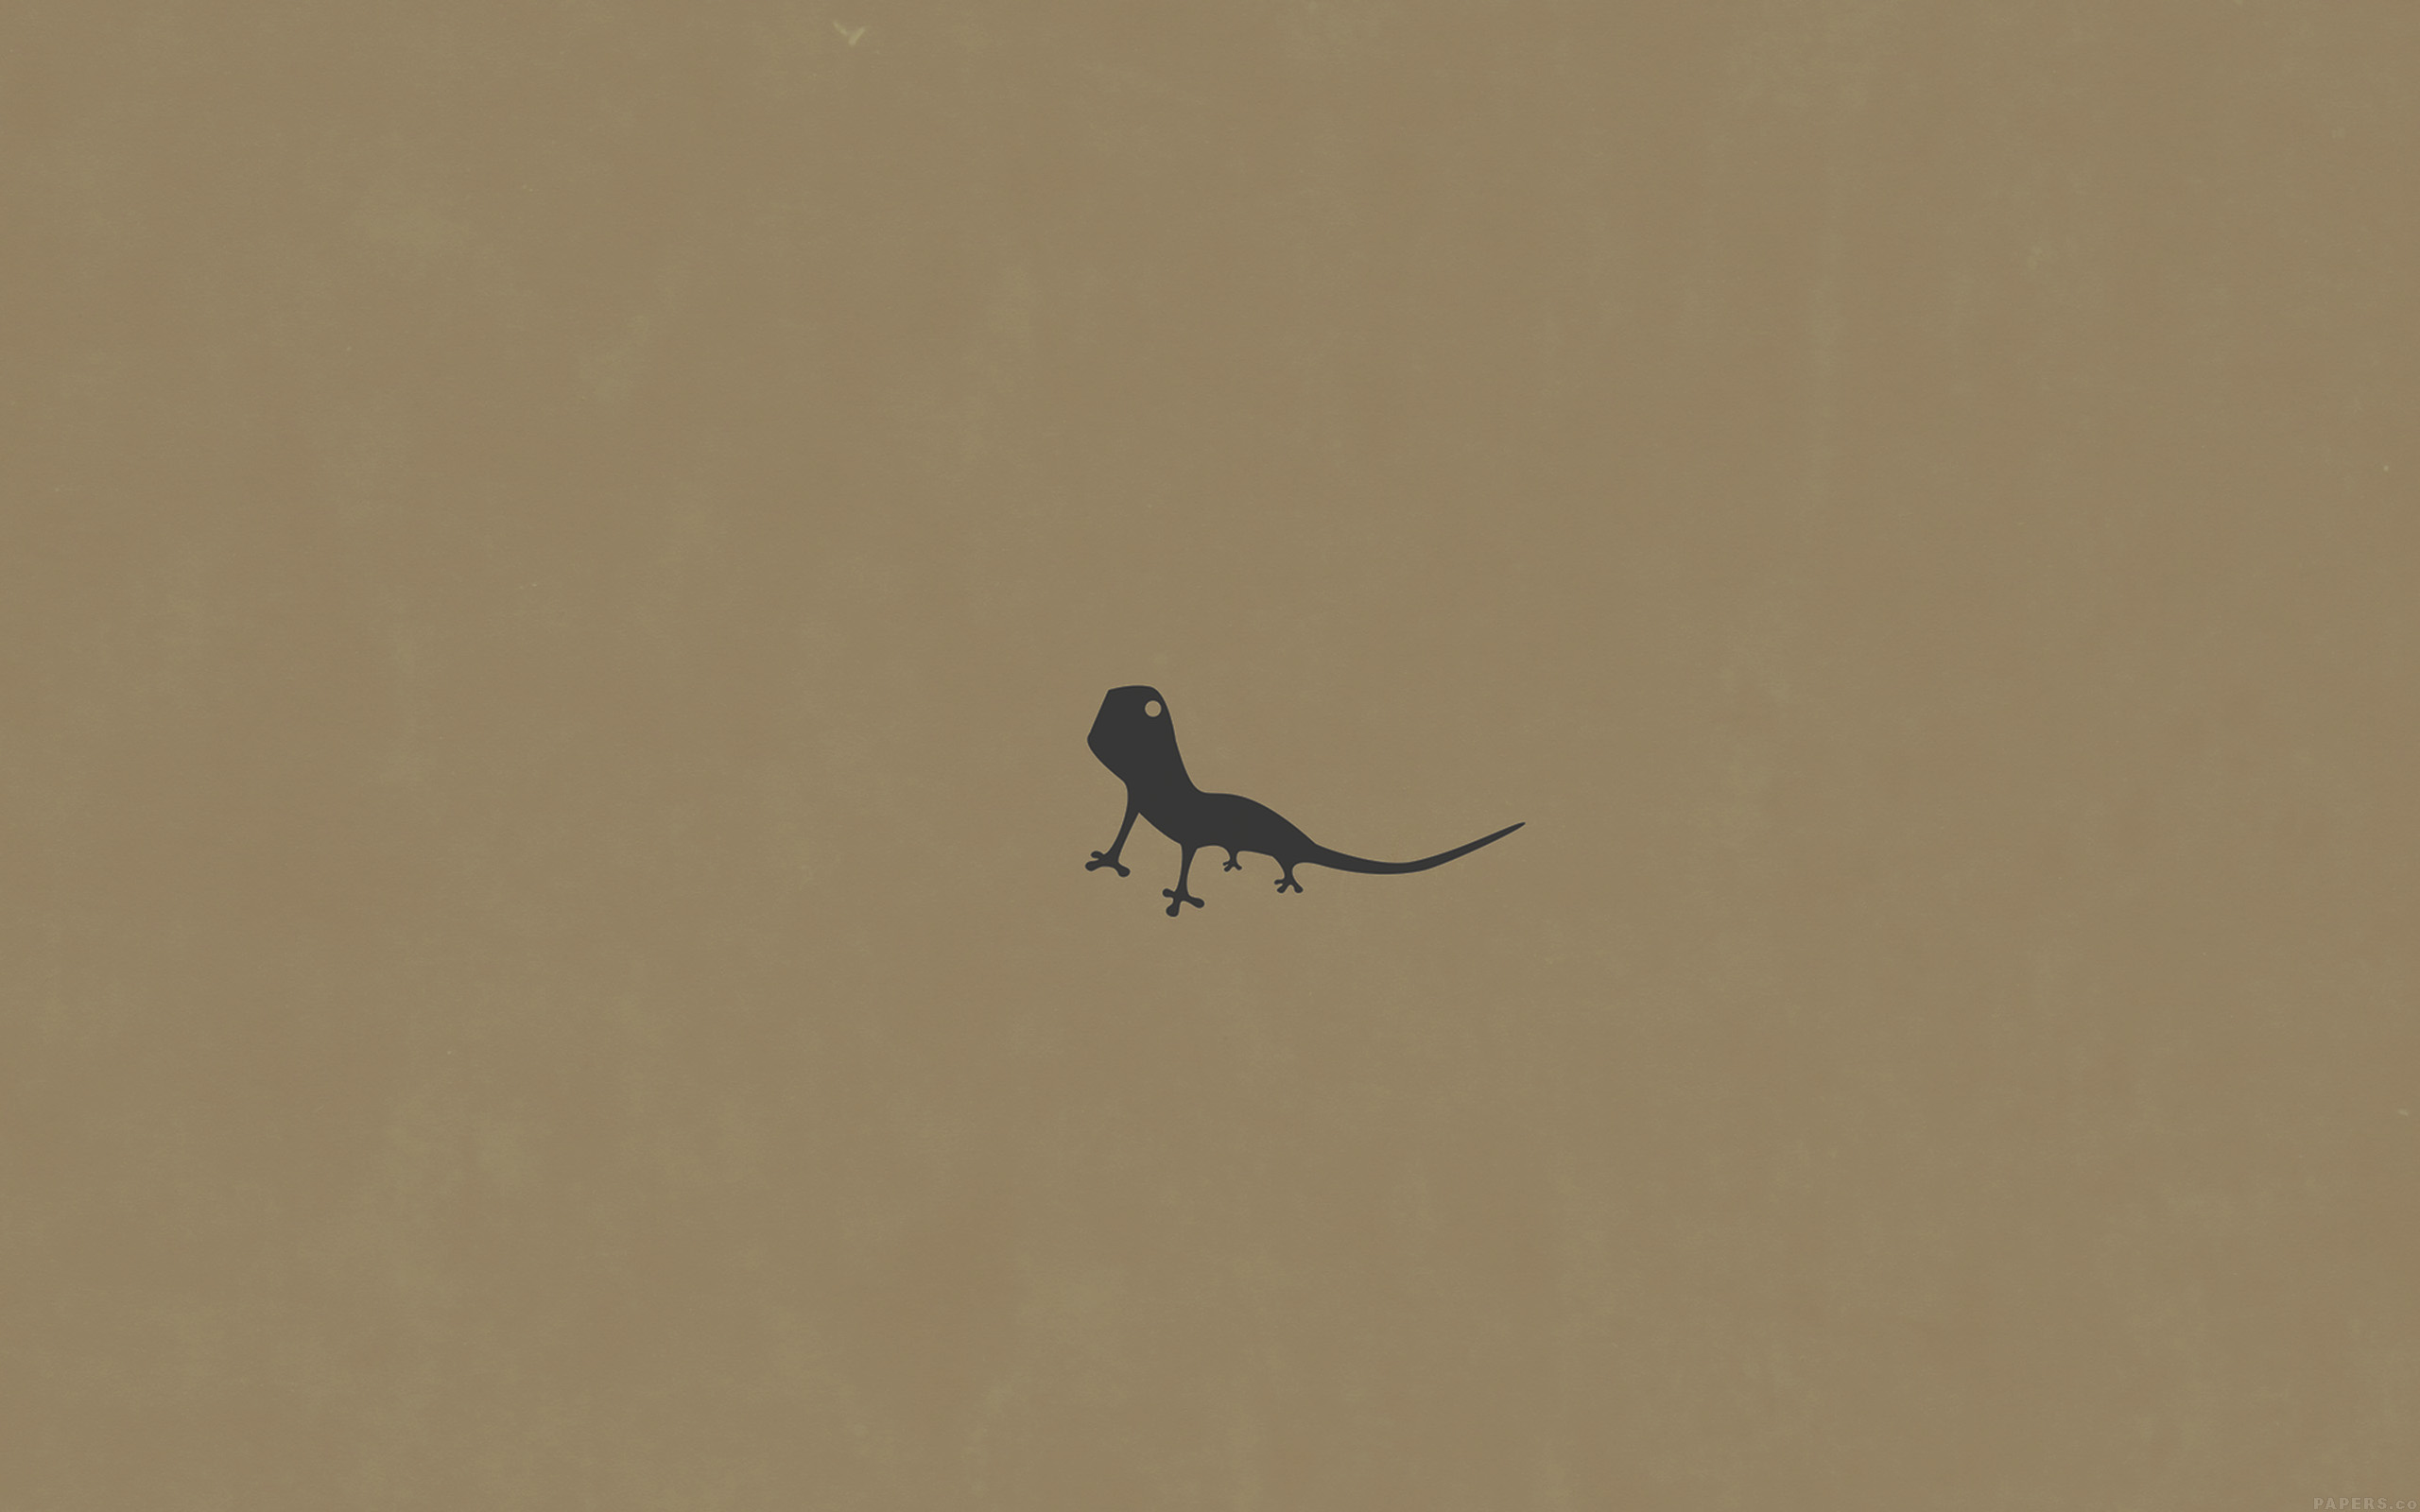 wallpaper for desktop, laptop. lizard brown animal minimal simple art